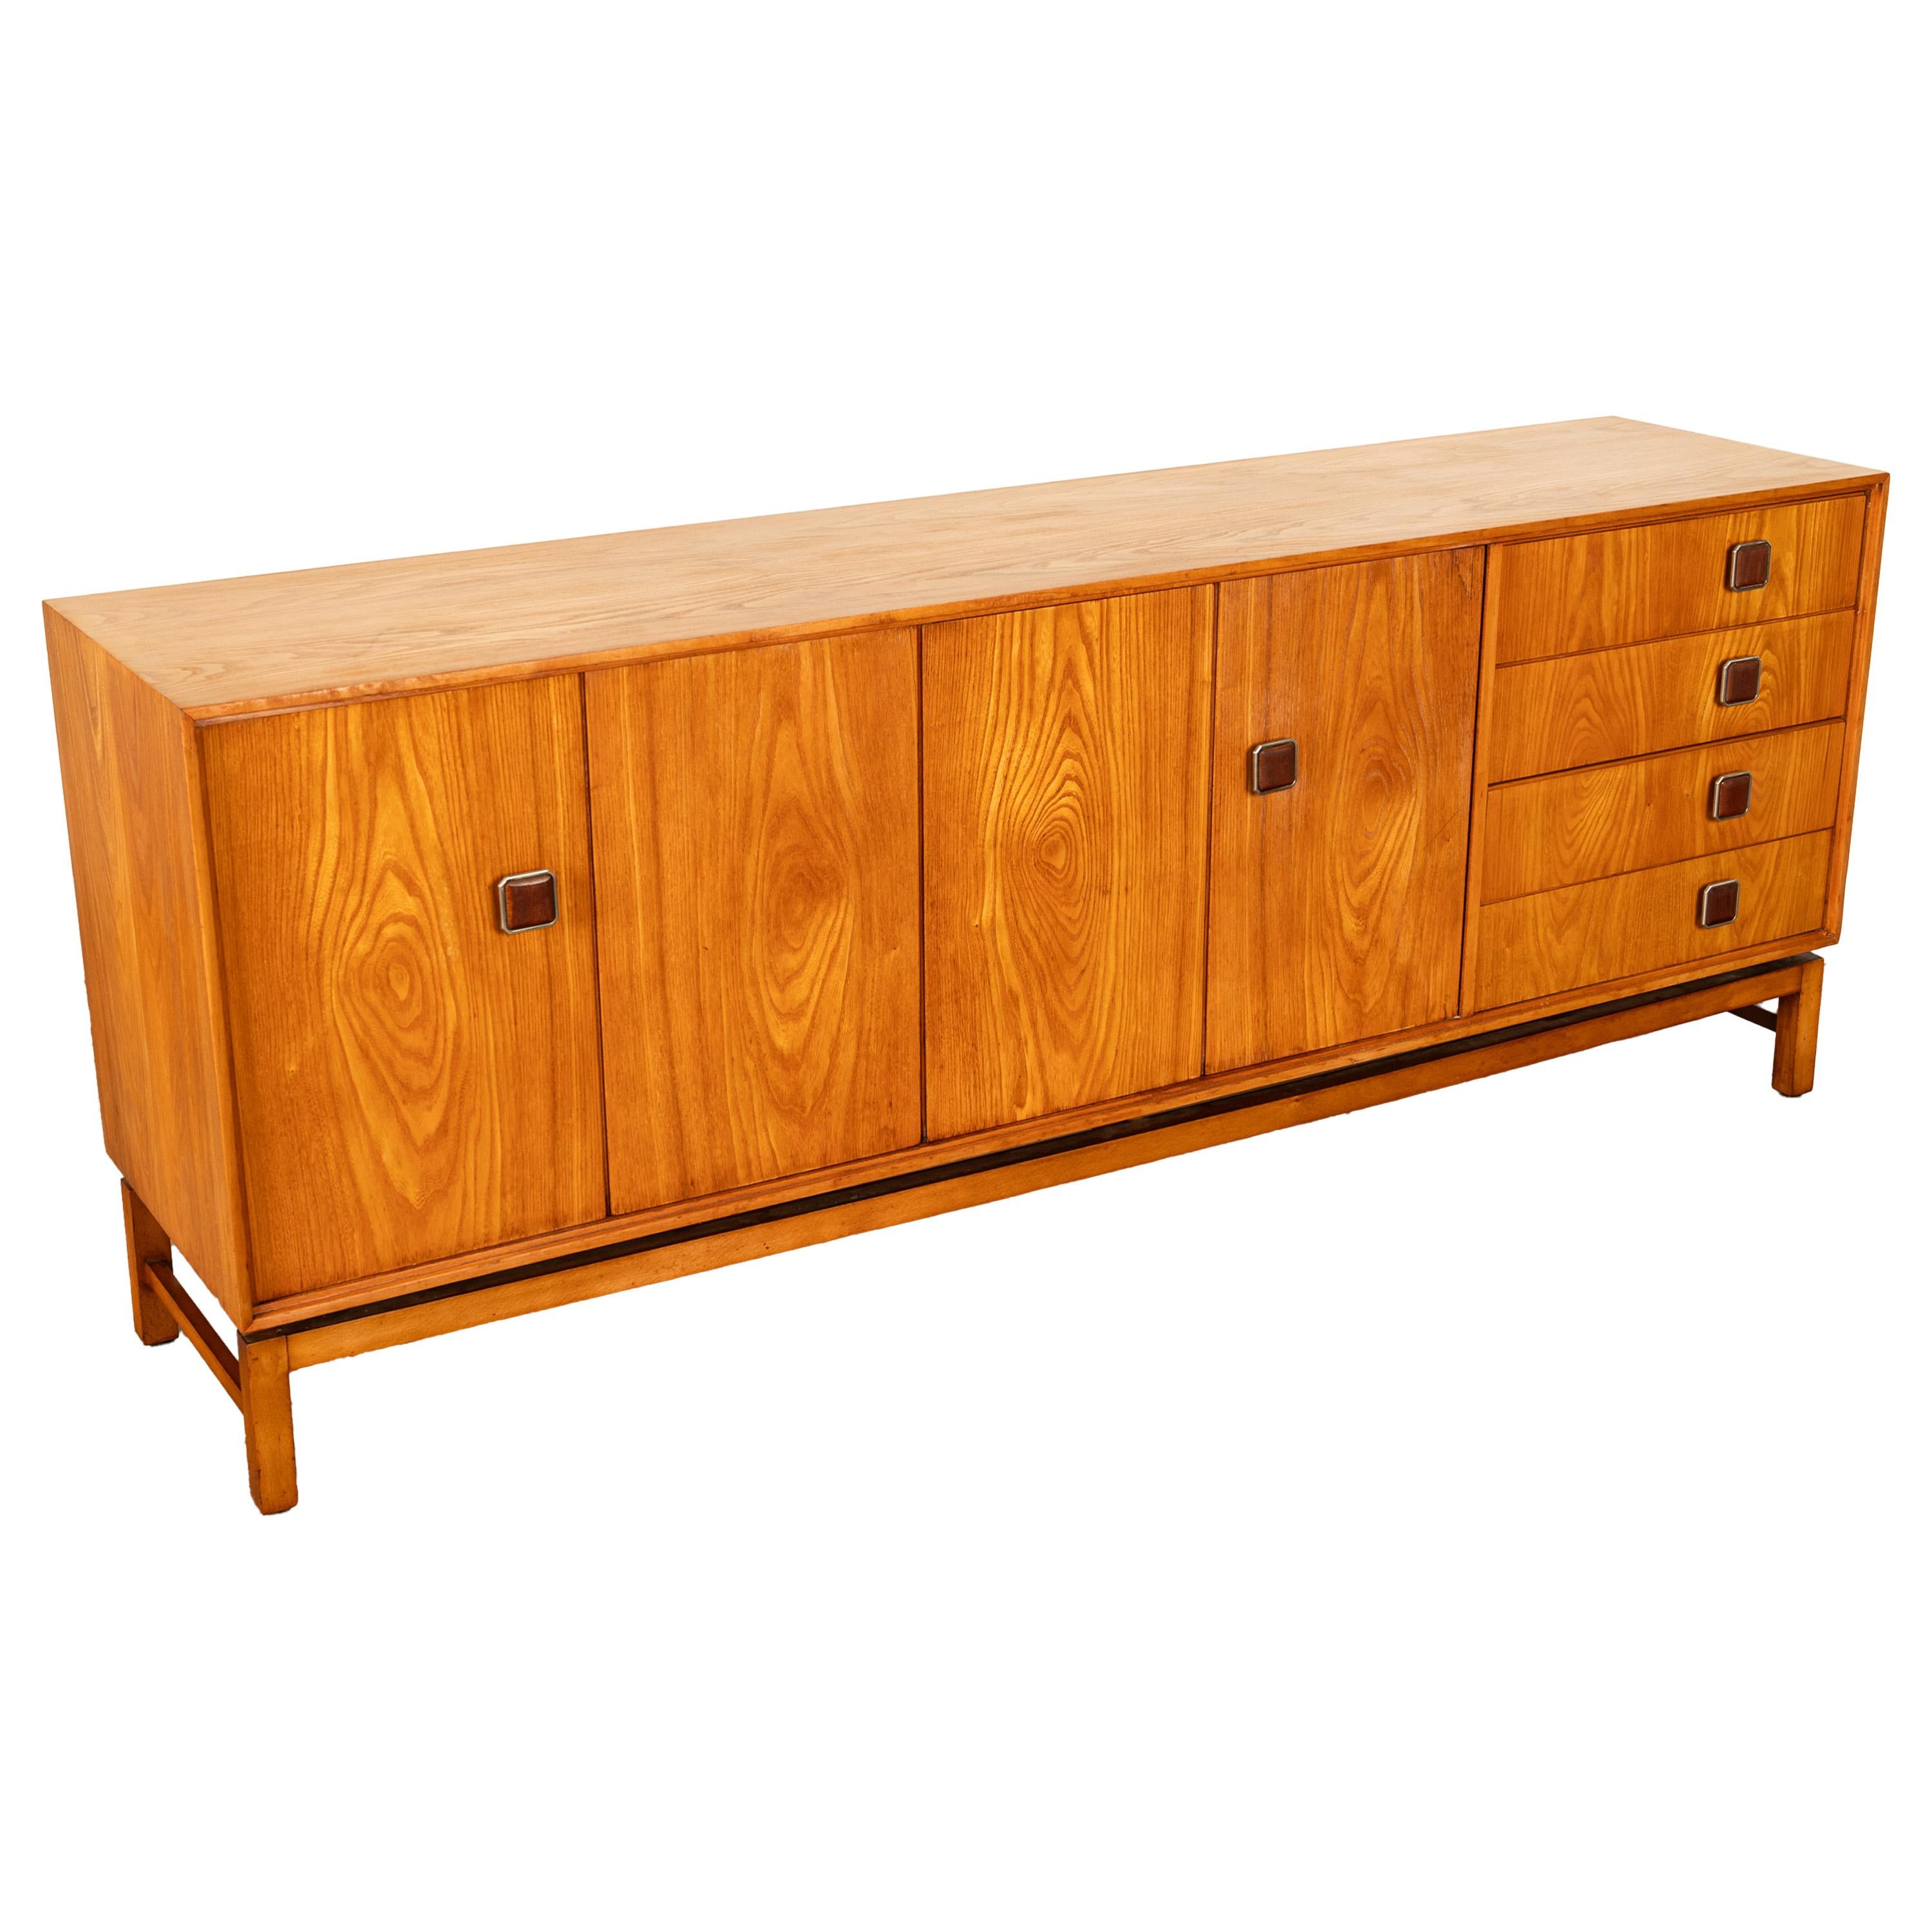 Original Danish Mid Century Modern Teak Credenza Sideboard Cabinet 6' Long 1960  6